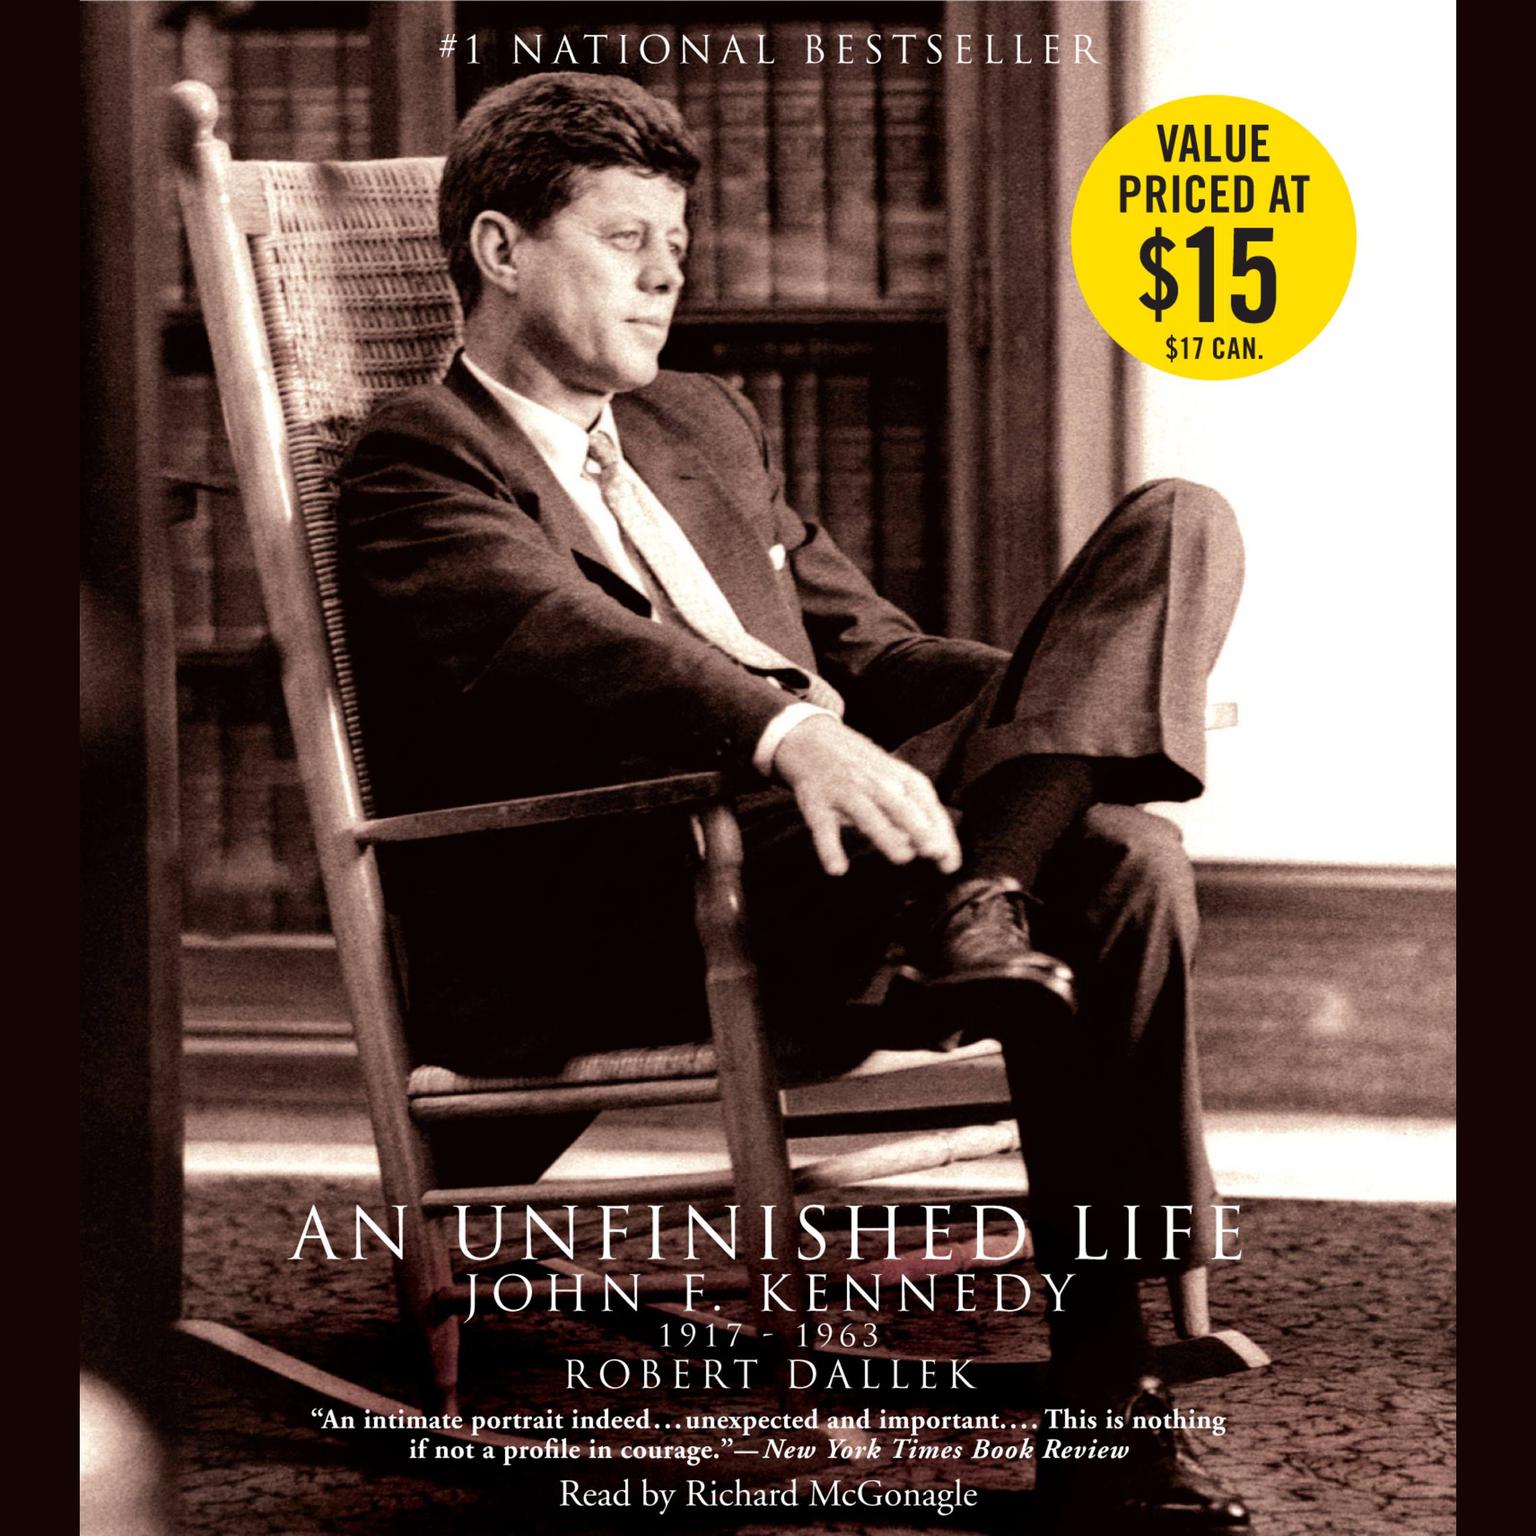 An Unfinished Life (Abridged): John F. Kennedy 1917-1963 Audiobook, by Robert Dallek